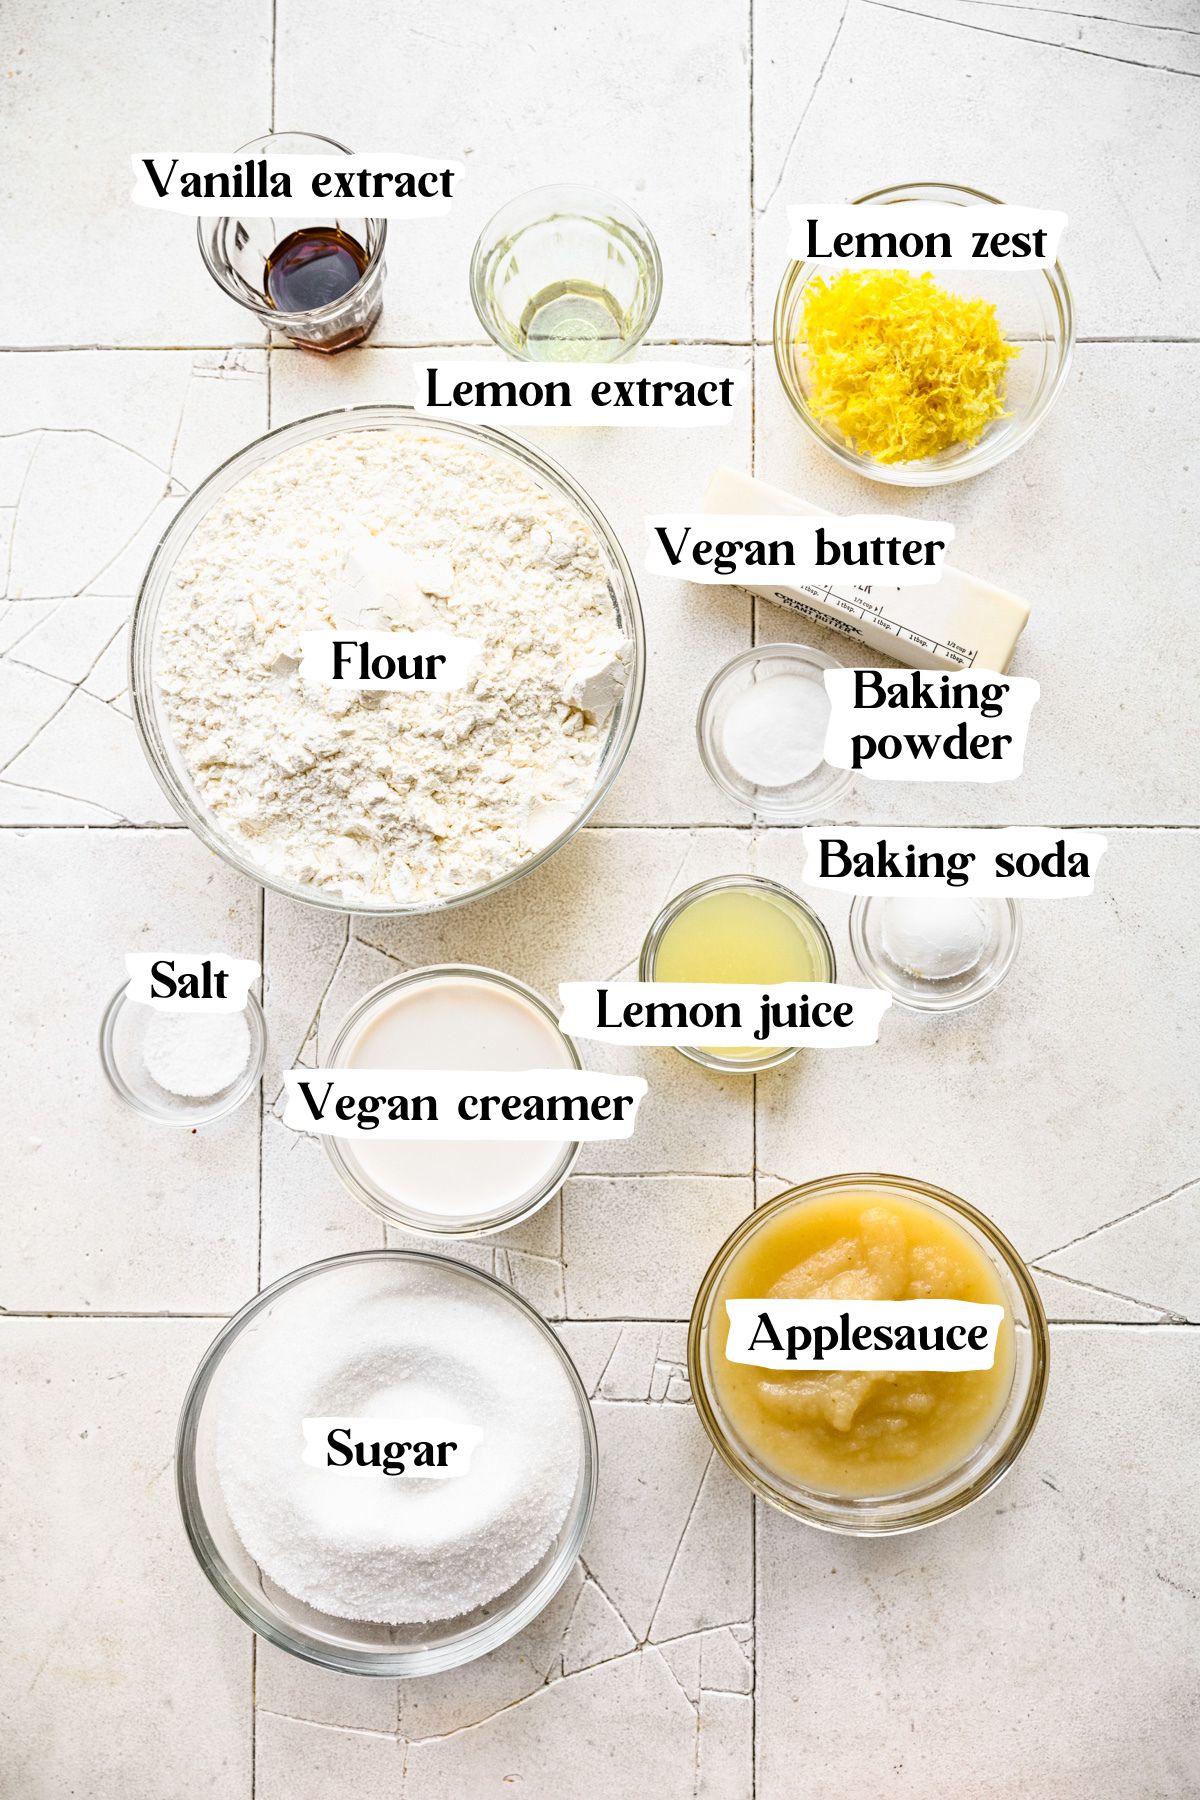 Vegan lemon cake ingredients including lemon juice and applesauce.